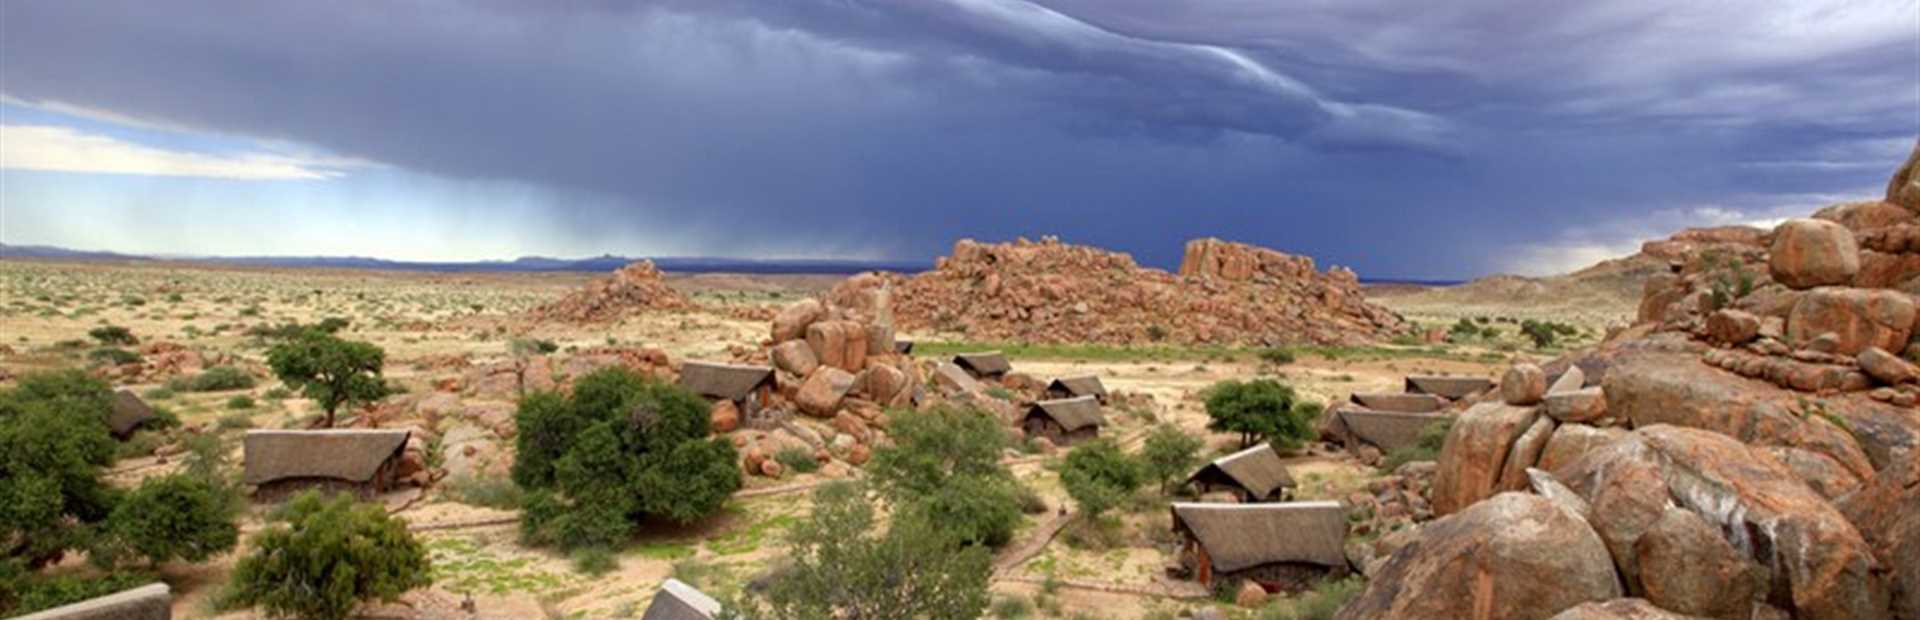 Remote Namibia